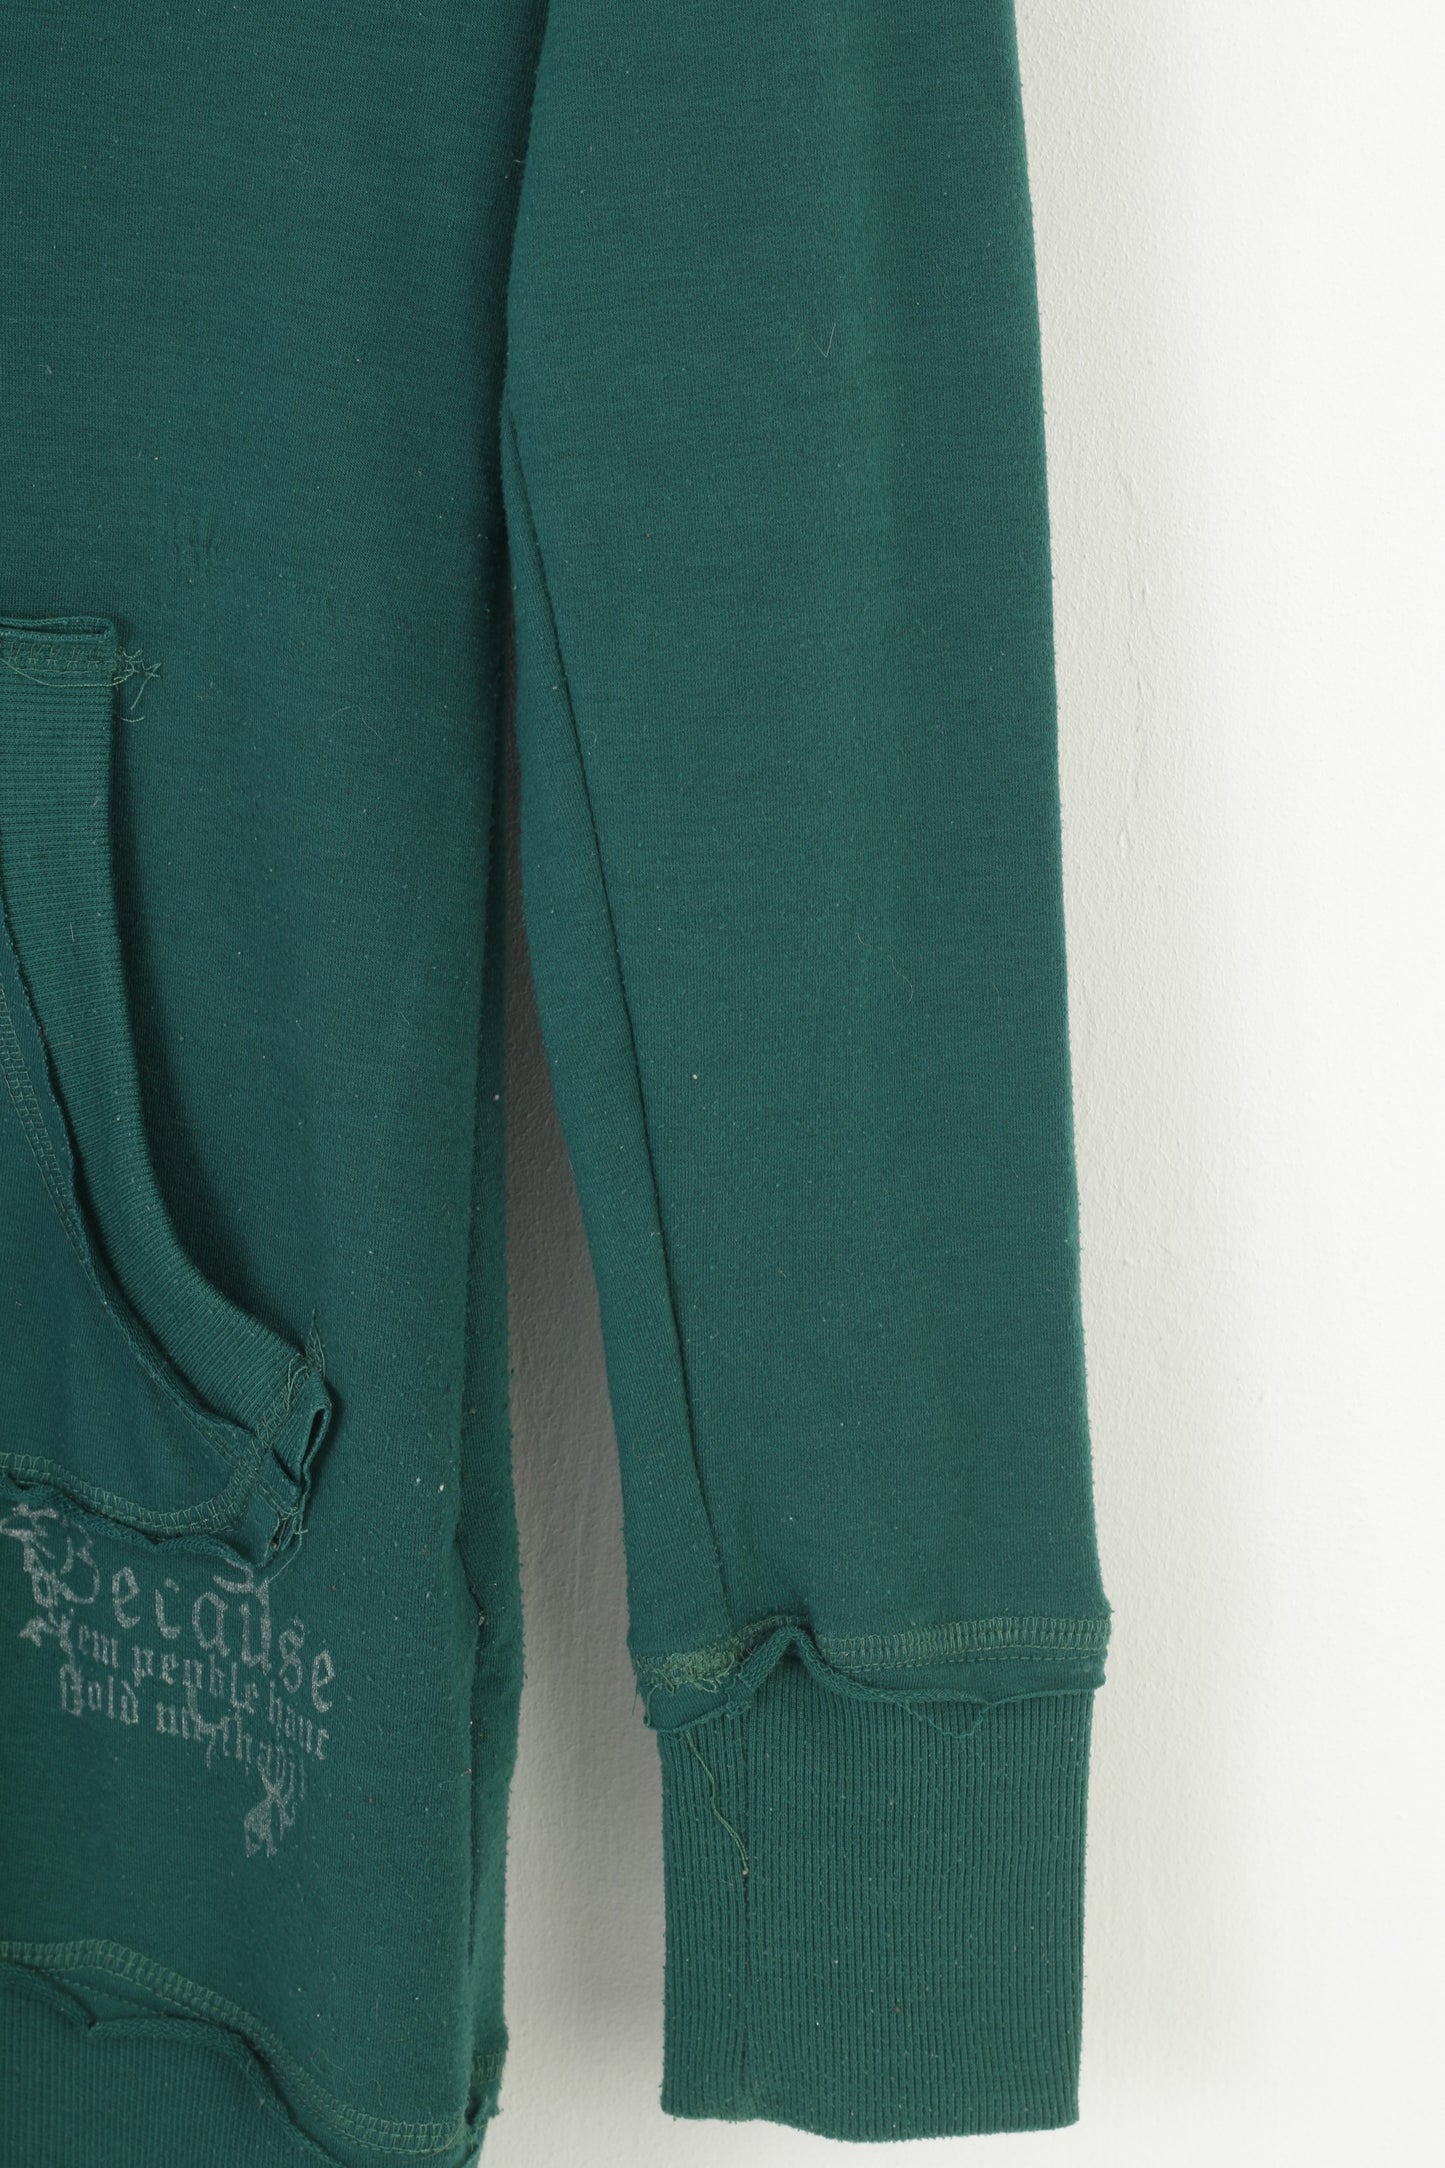 M.Elysse Women M Sweatshirt Green Hooded Long Tunic Kangaroo Pocket V Neck Vintage Top